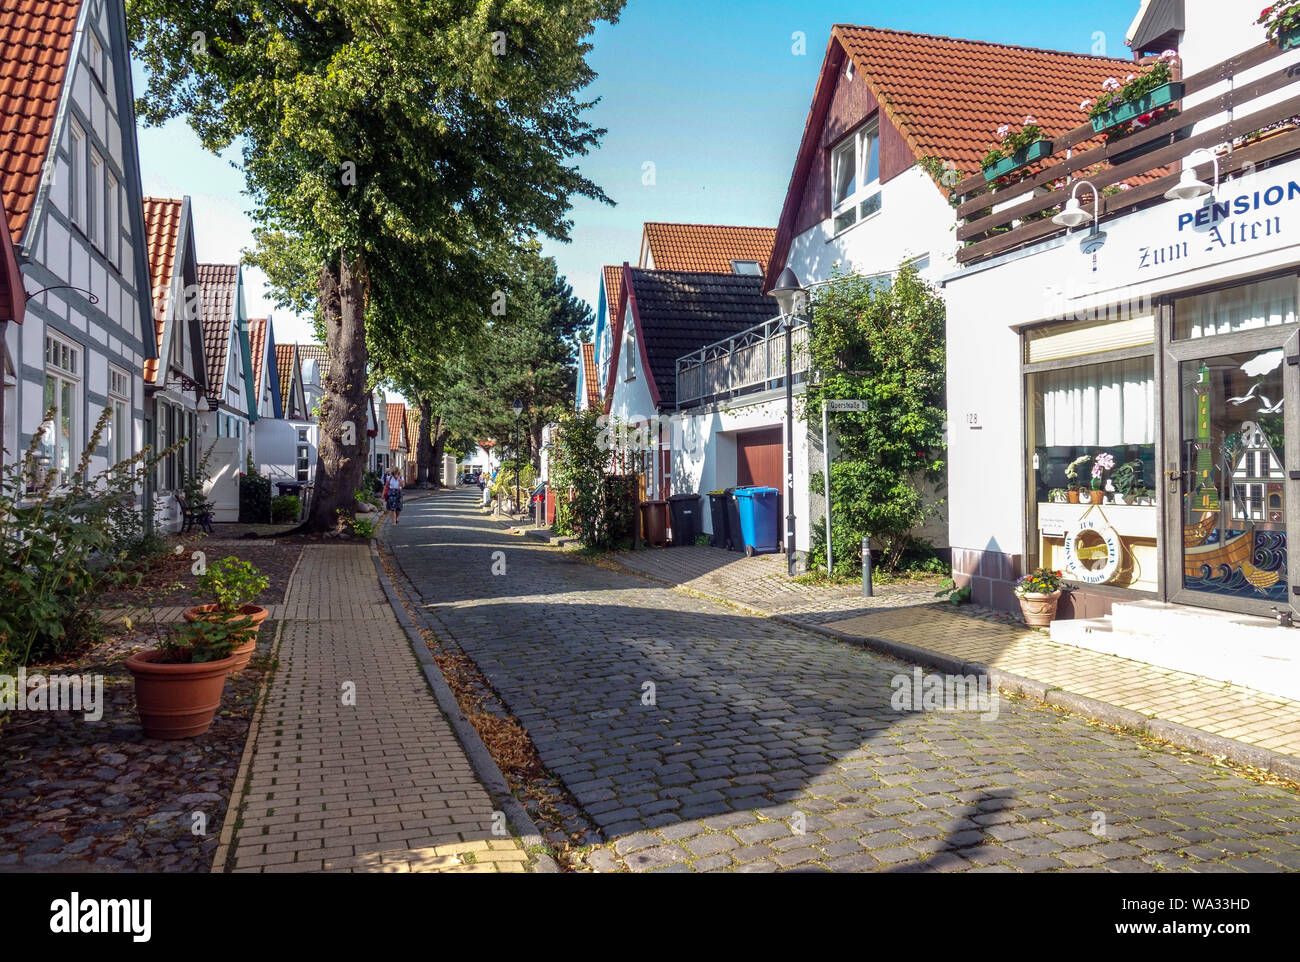 L'Allemagne de Warnemunde Alexandrinenstrasse, vieille ville avec des maisons à colombages Rostock Allemagne Banque D'Images